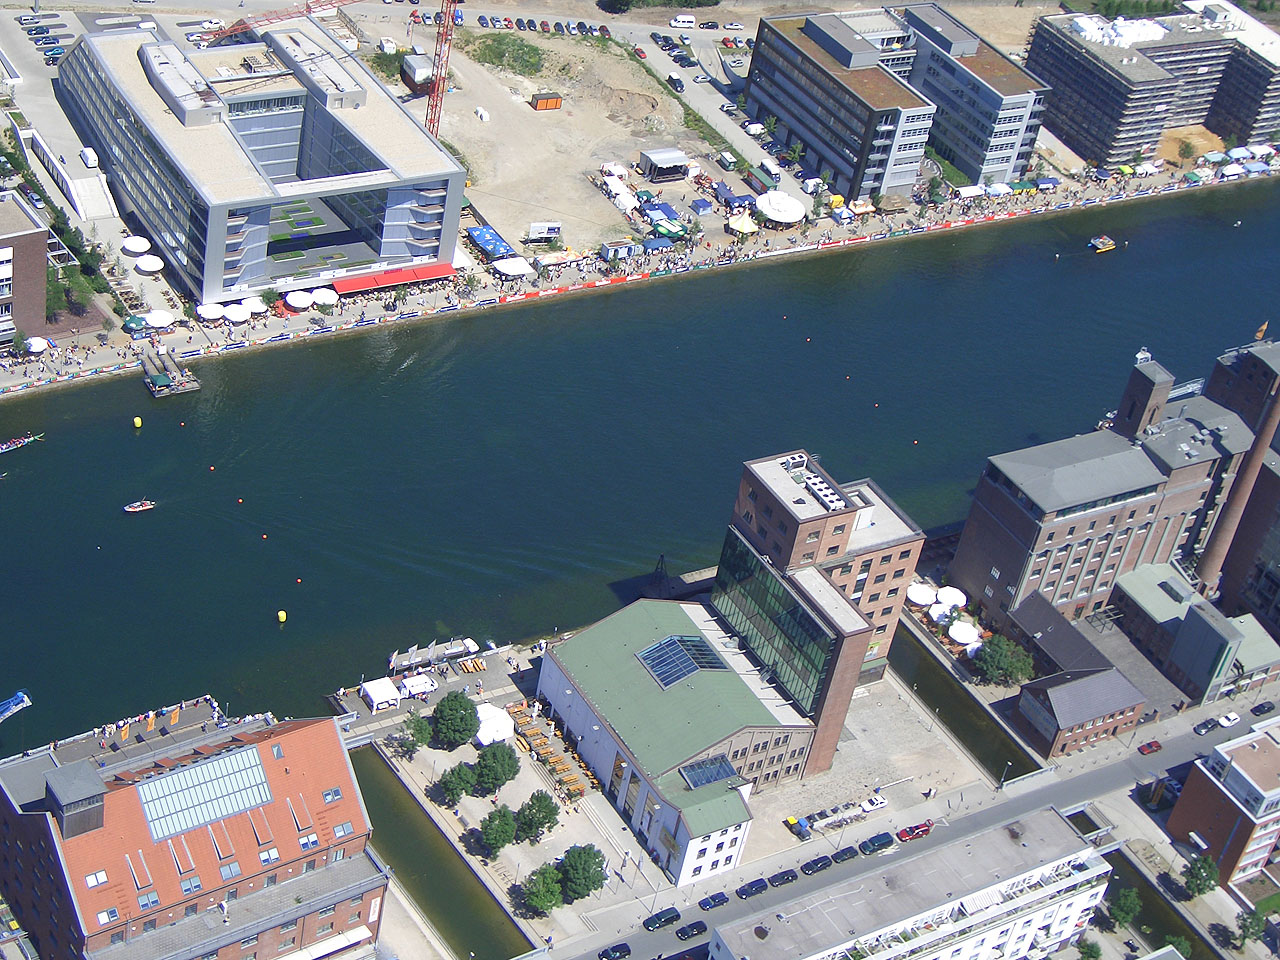 Drachenbootrennen im Duisburger Innenhafen
